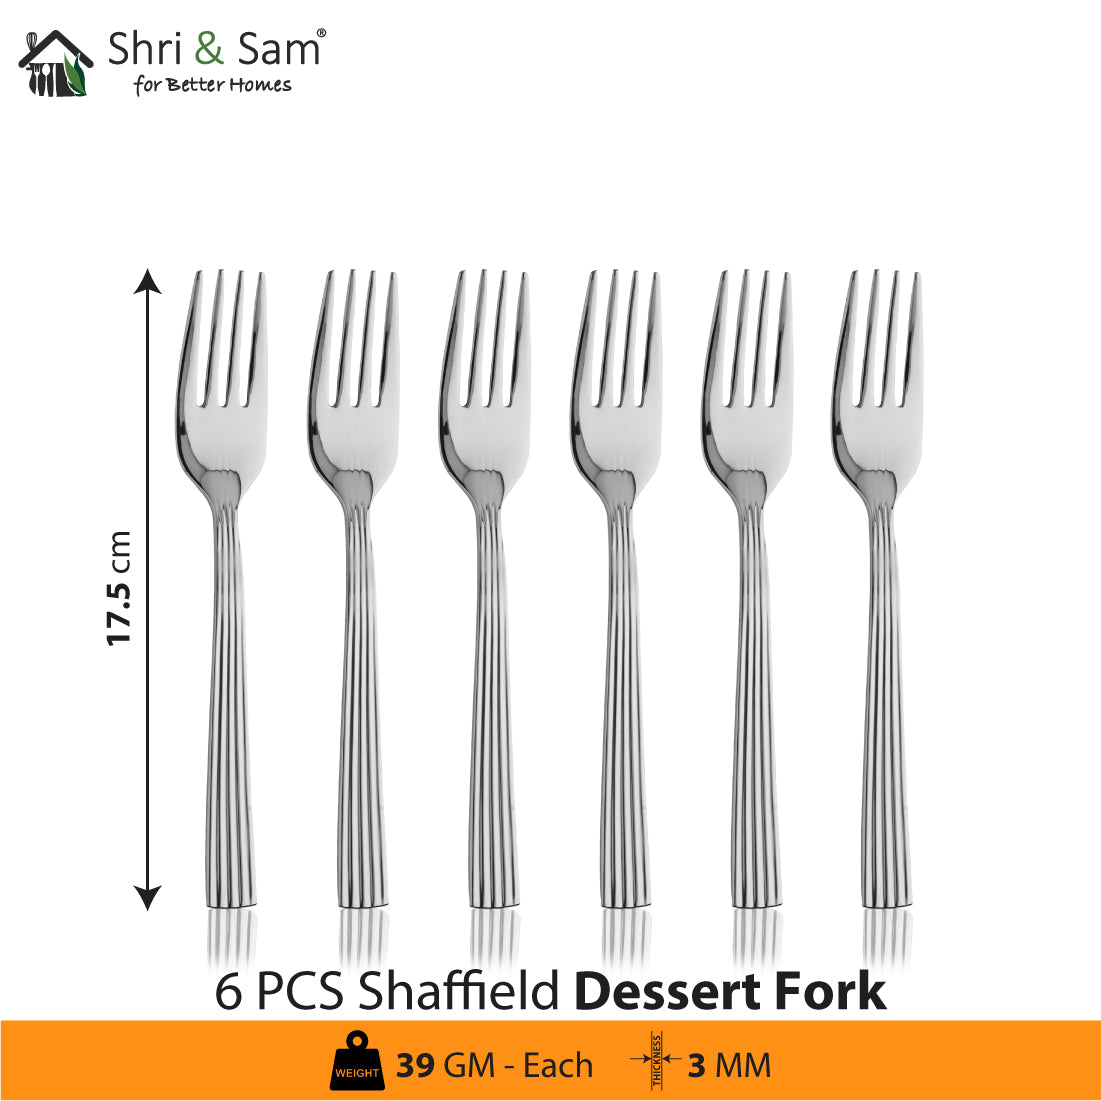 Jagdamba Cutlery Pvt Ltd. Cutlery 24 PCS Cutlery set- Shaffield